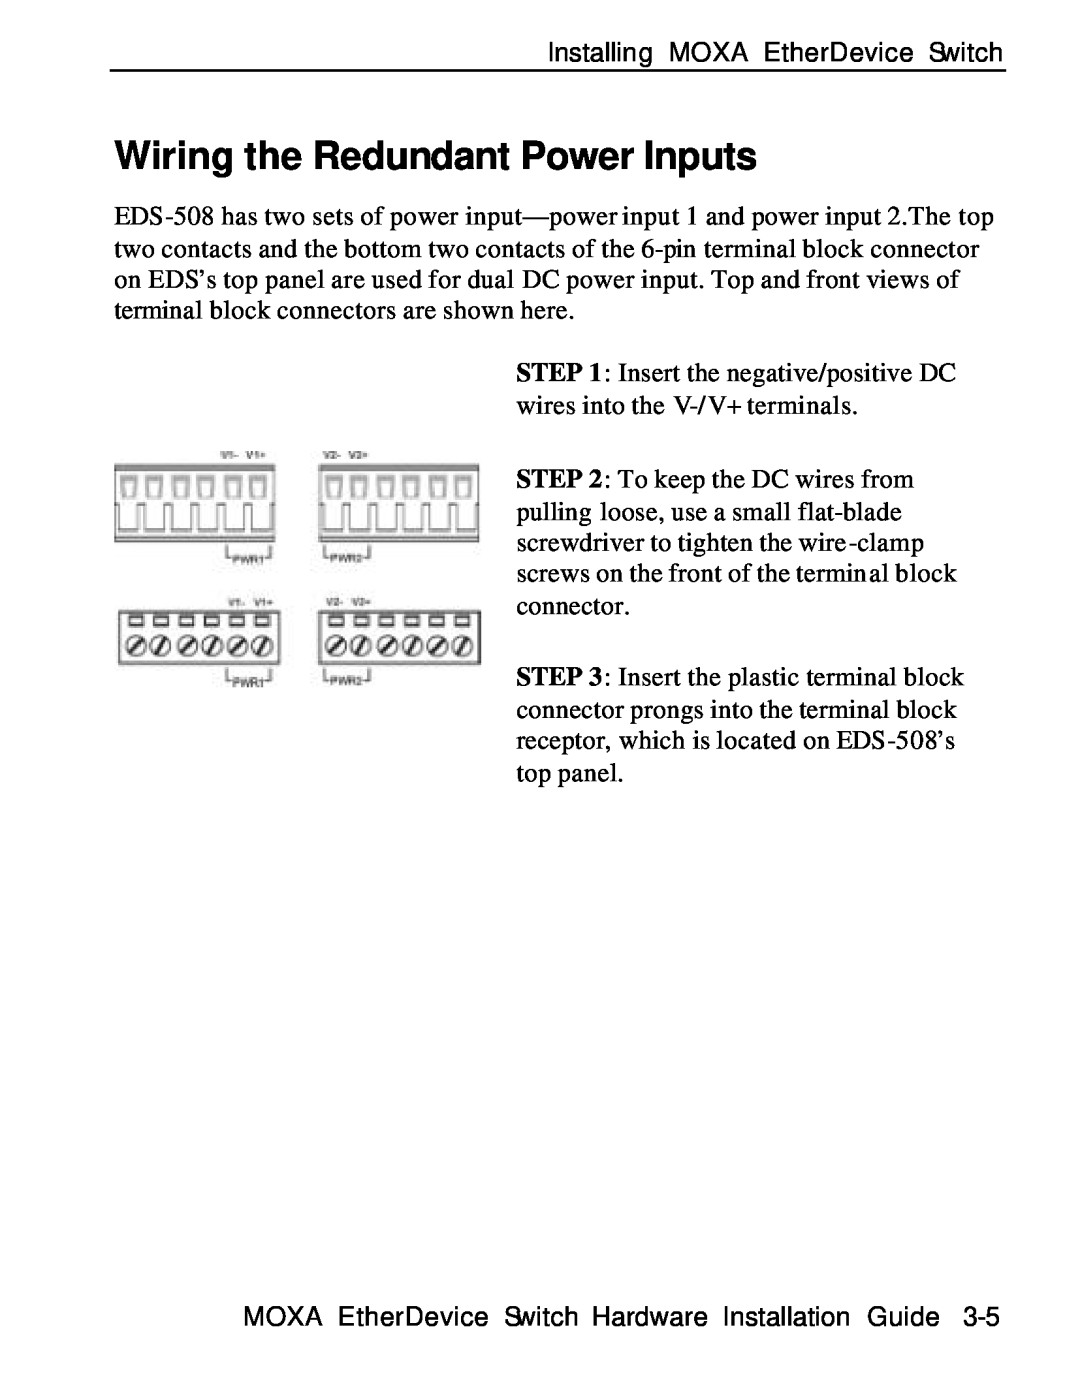 Moxa Technologies EDS-508 manual Wiring the Redundant Power Inputs 